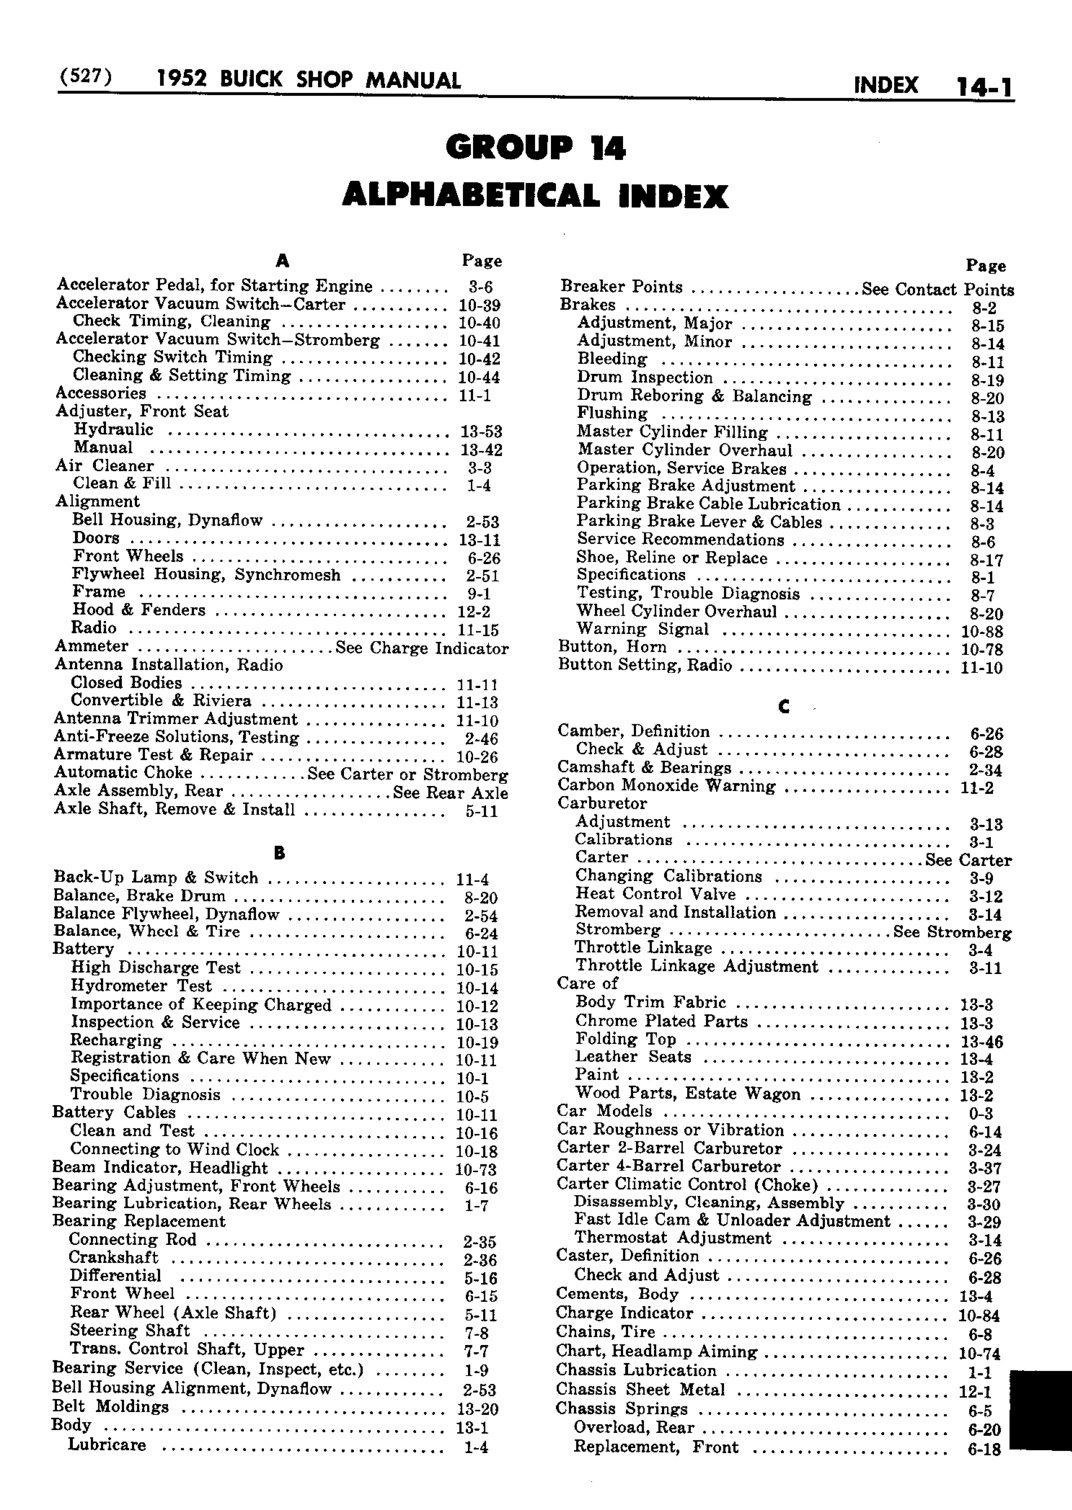 n_15 1952 Buick Shop Manual - Index-001-001.jpg